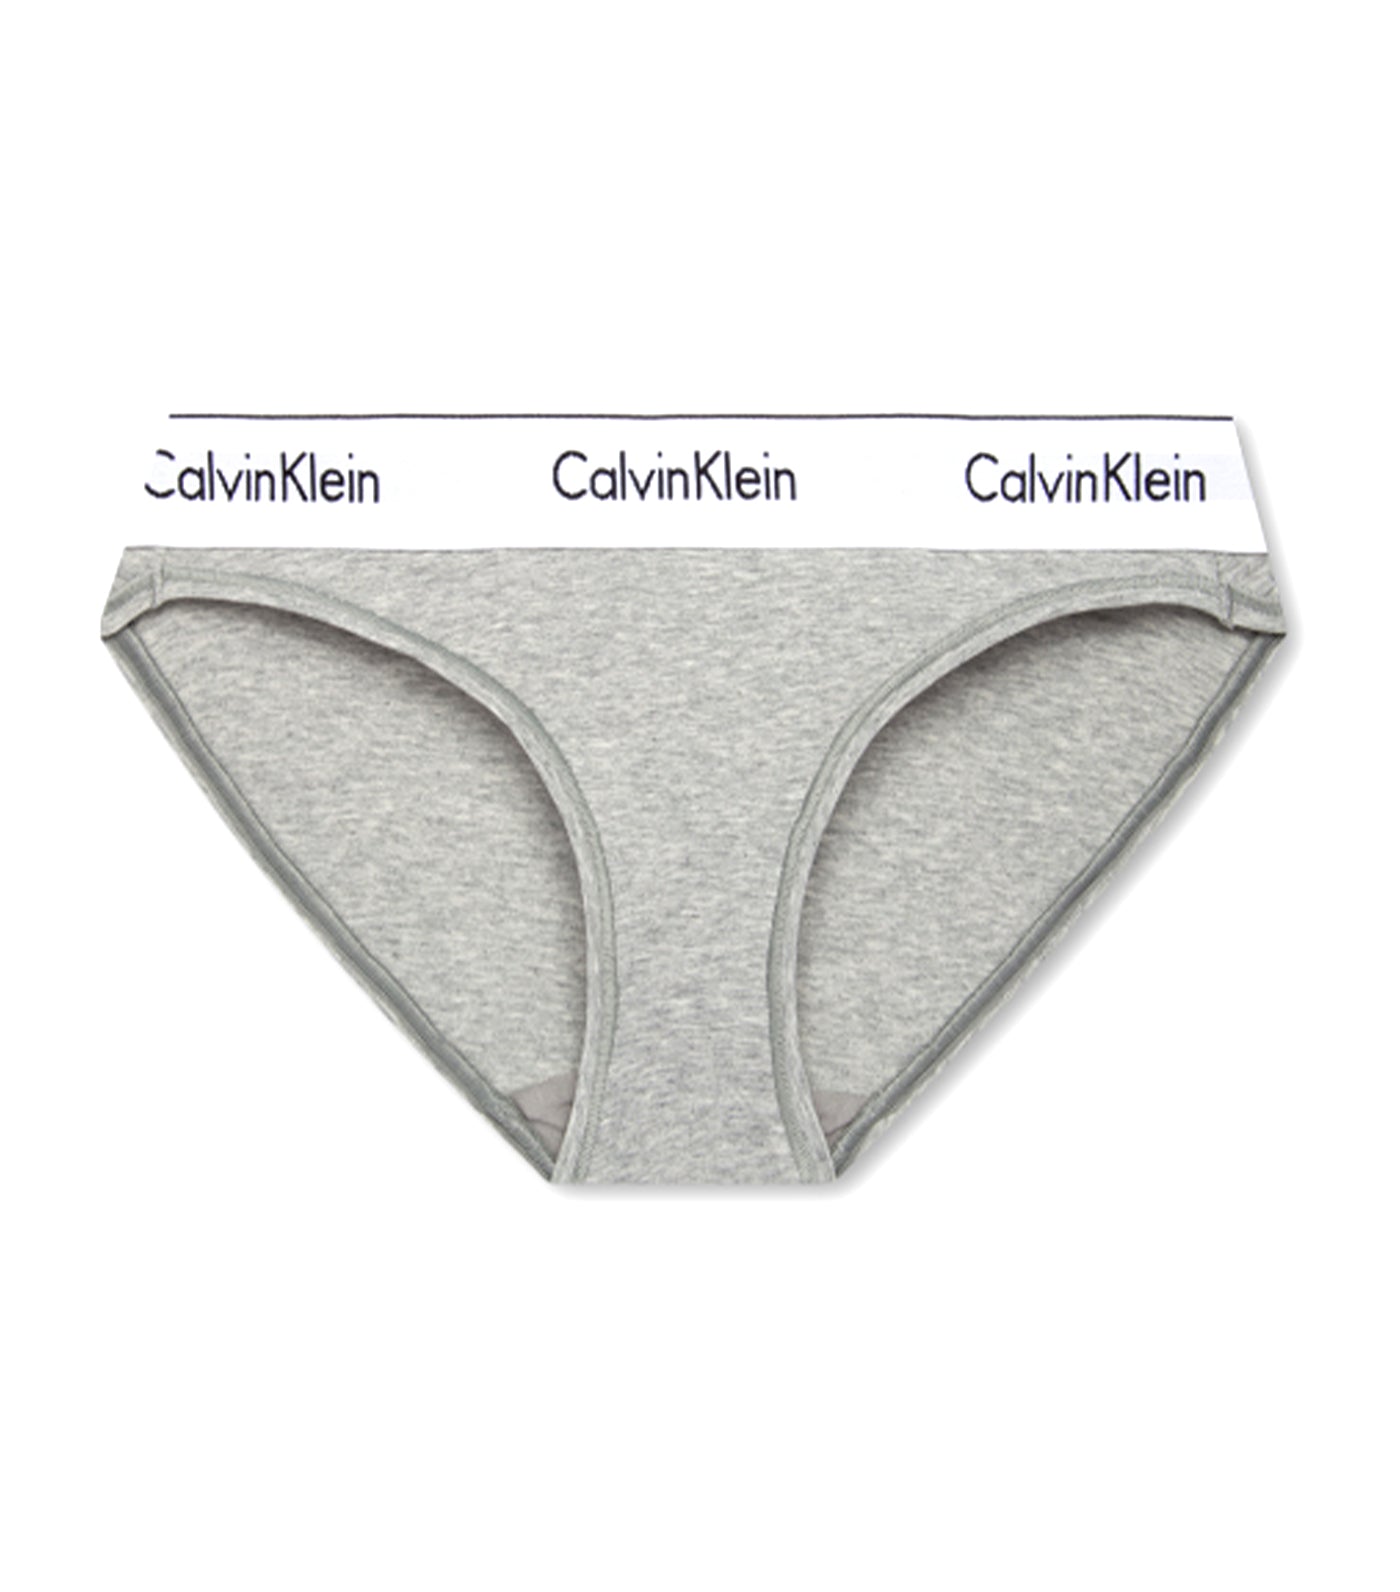 Calvin Klein Underwear 2-Pack Bikini Panties, Peach/Grey Heather